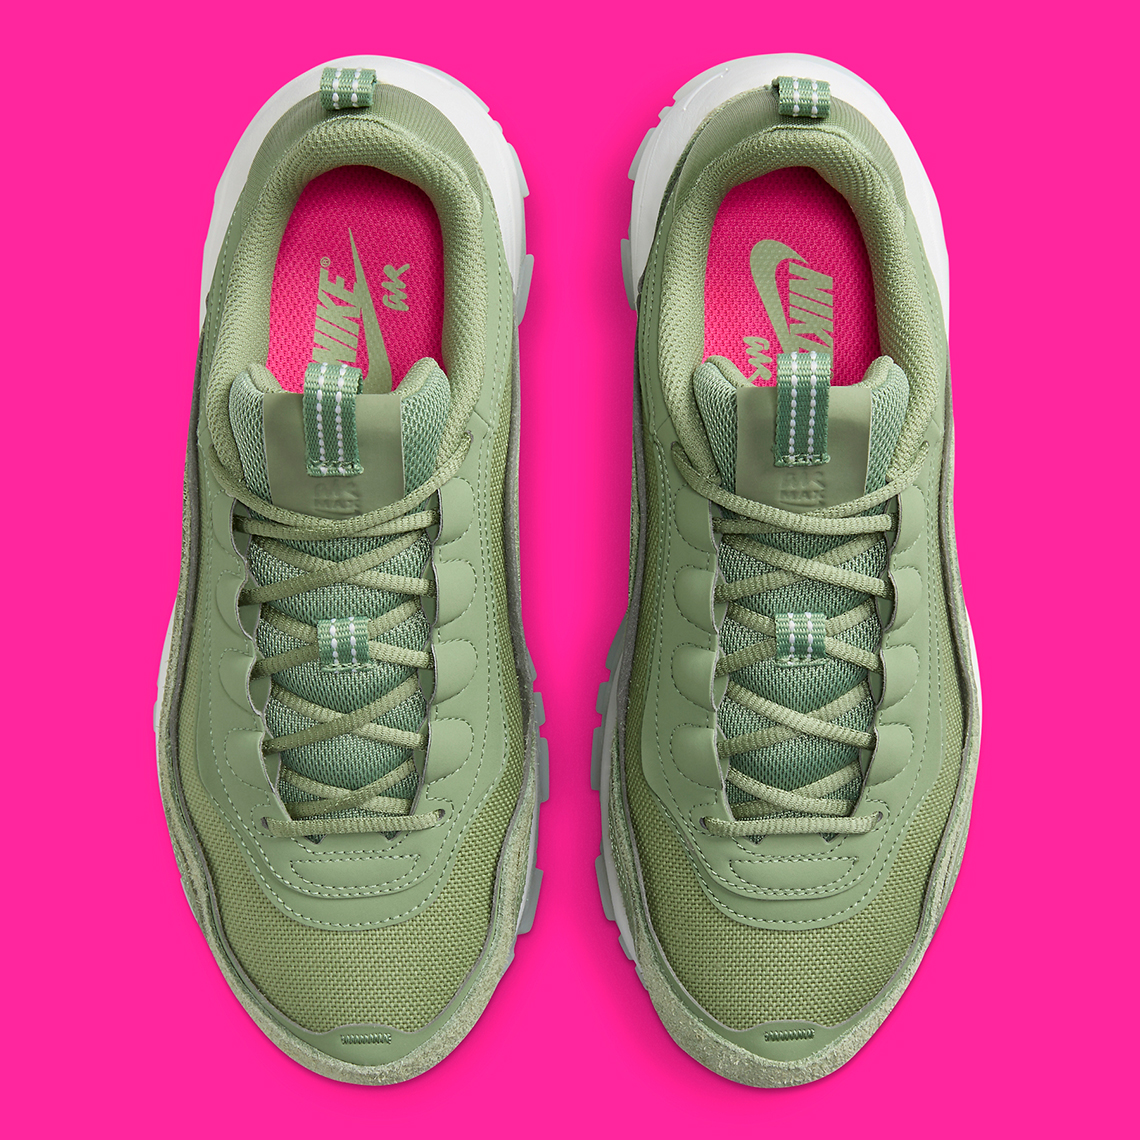 Sneaker News on X: Introducing the Nike Air Max 97 Futura